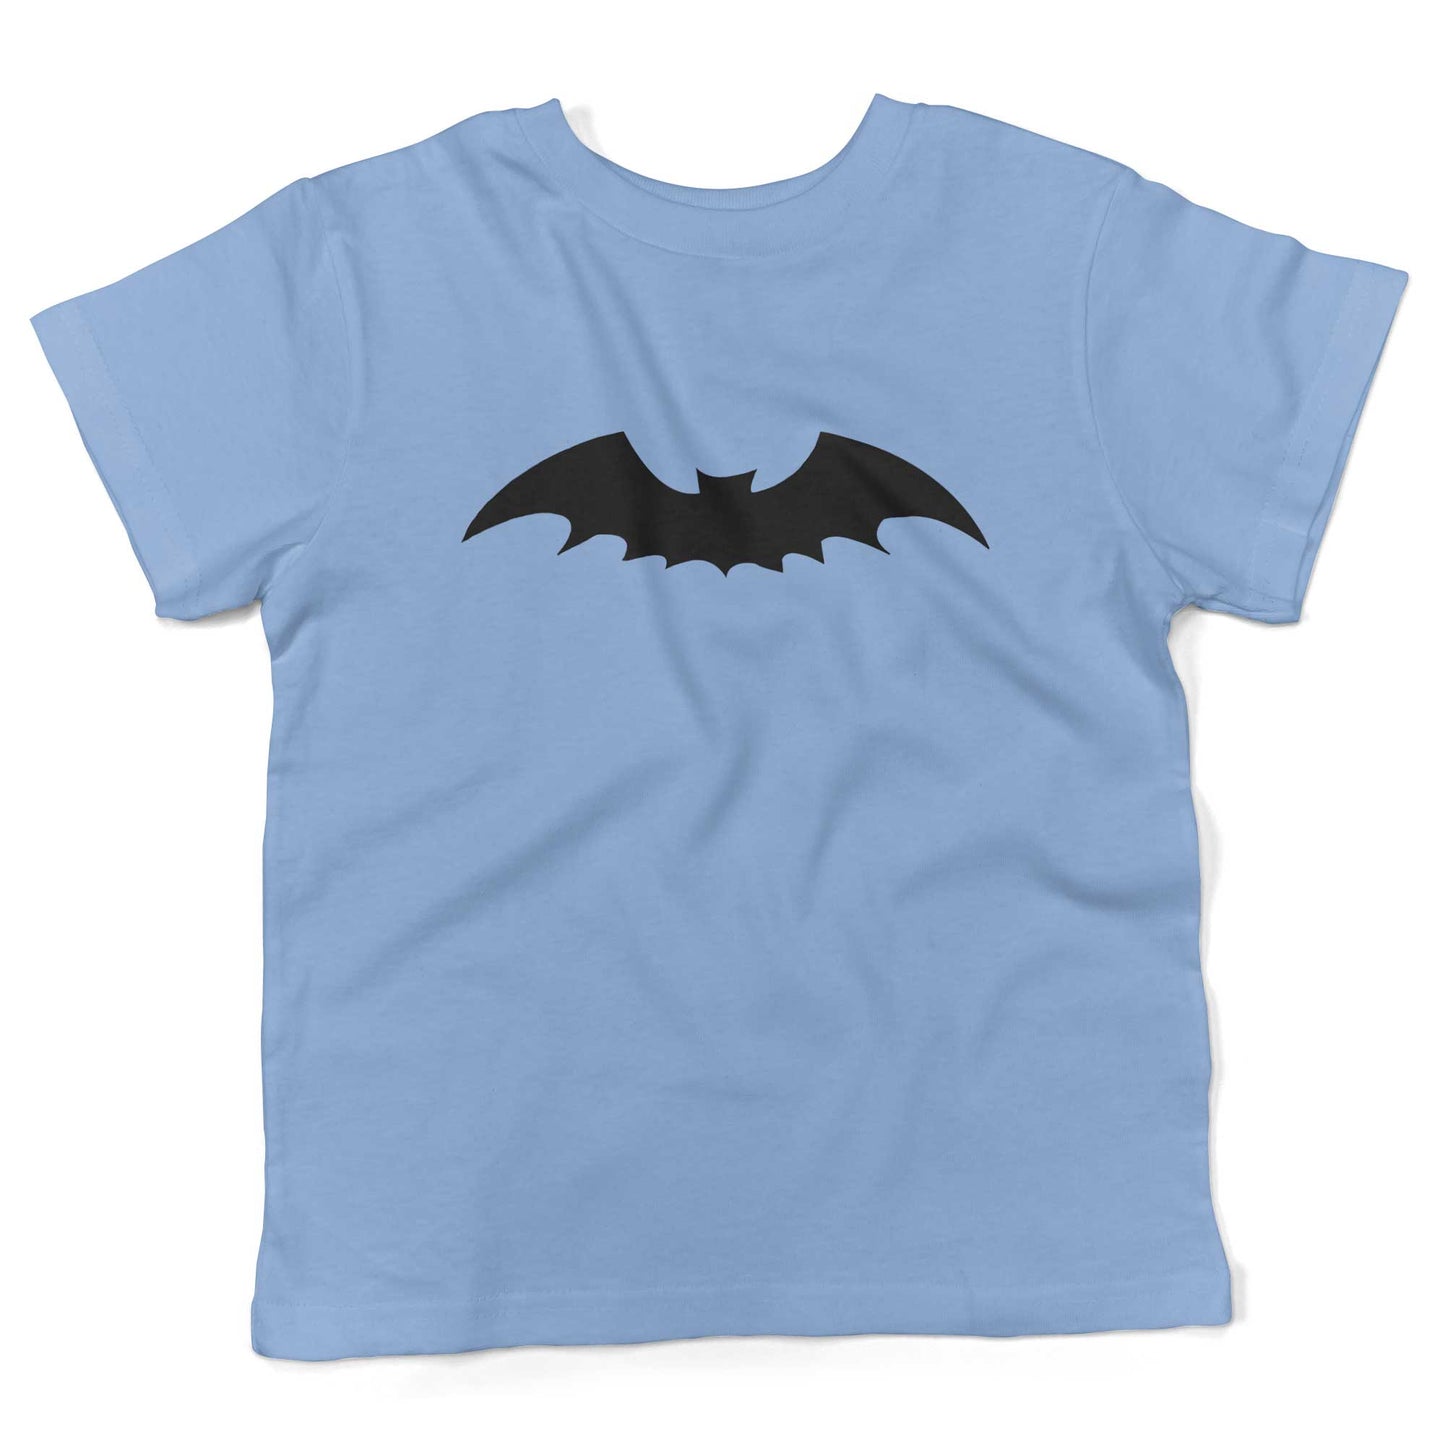 Gothic Bat Toddler Shirt-Organic Baby Blue-2T